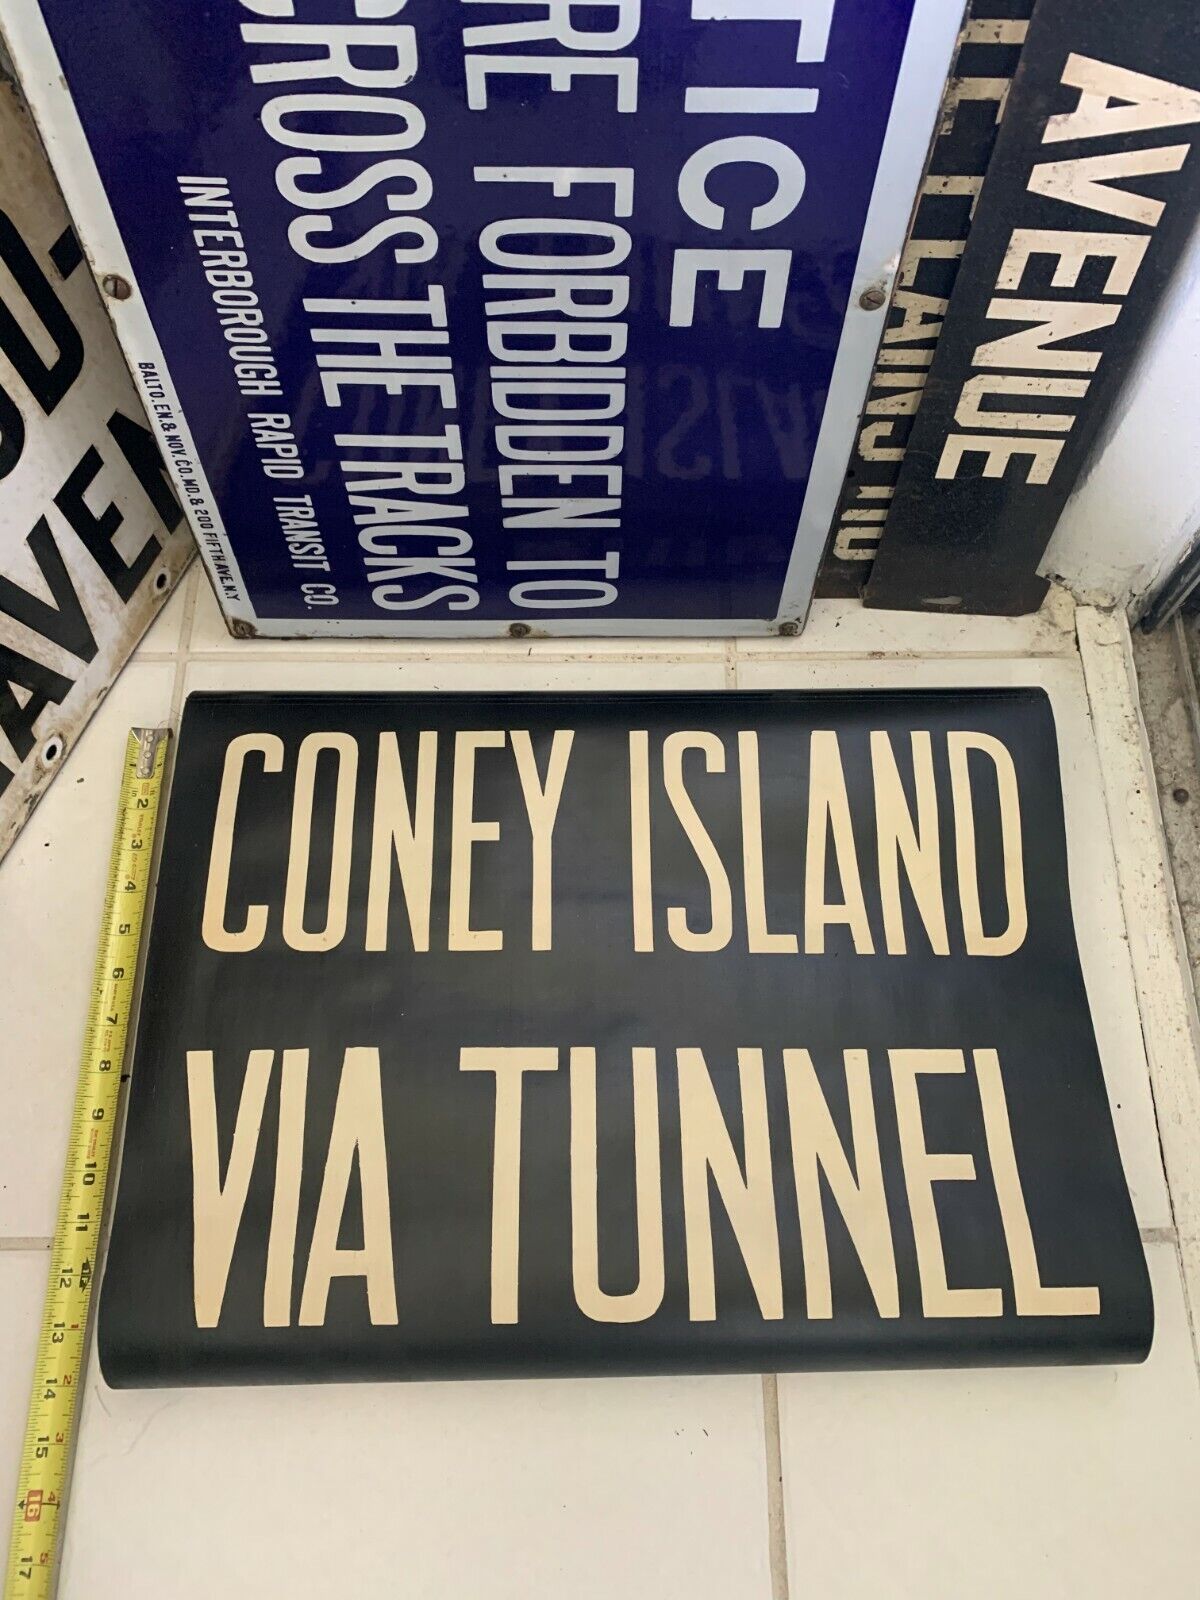 1948 NY NYC SUBWAY ROLL SIGN BROOKLYN TUNNEL CONEY ISLAND AMUSEMENT PARK CYCLONE